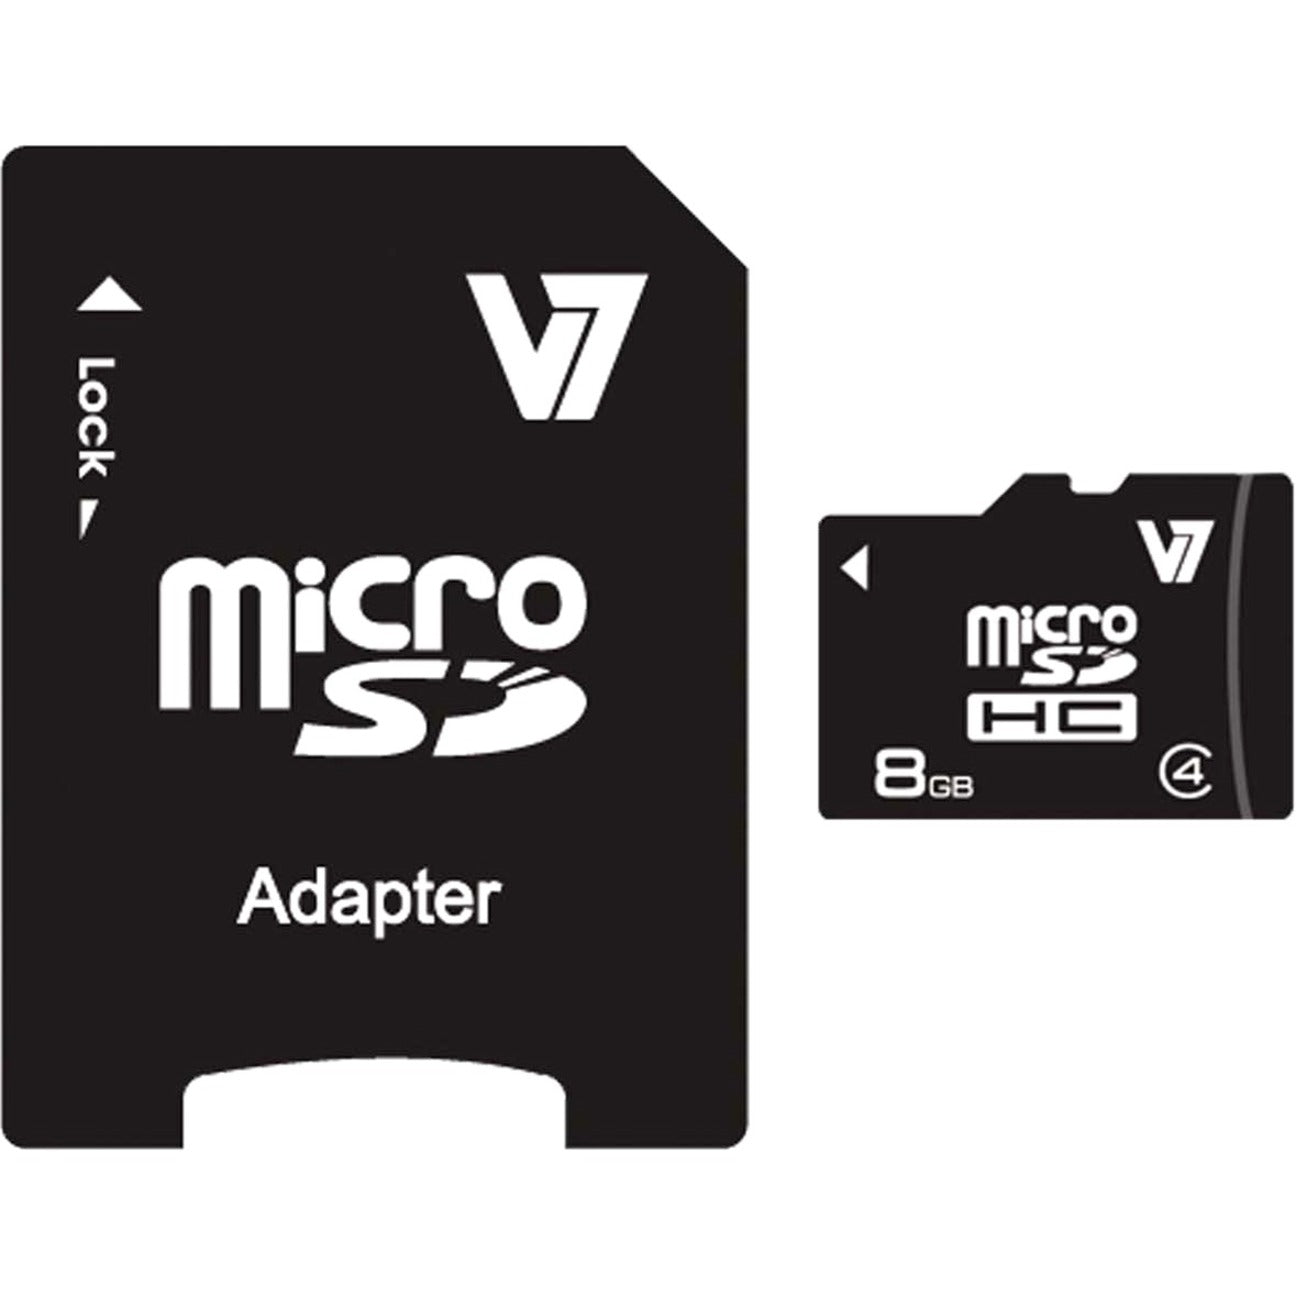 V7 VAMSDH8GCL4R-1N microSDHC 8GB Card, 10 MB/s Read, 4 MB/s Write